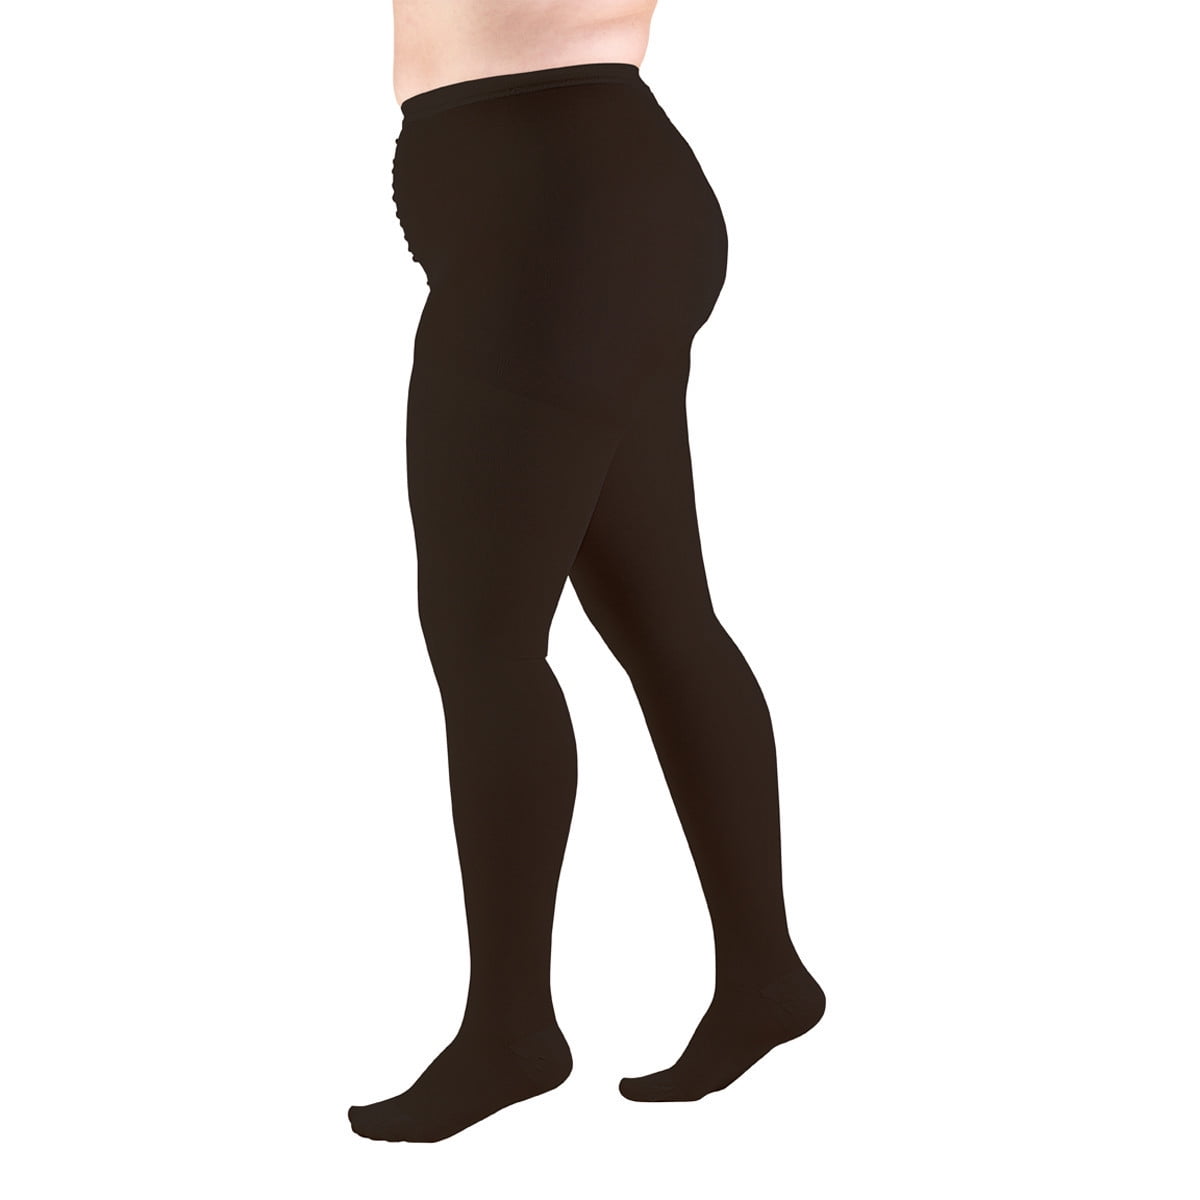 Truform Pantyhose, Plus Size Full Figure 20-30 mmHg, Black, Medium Foto